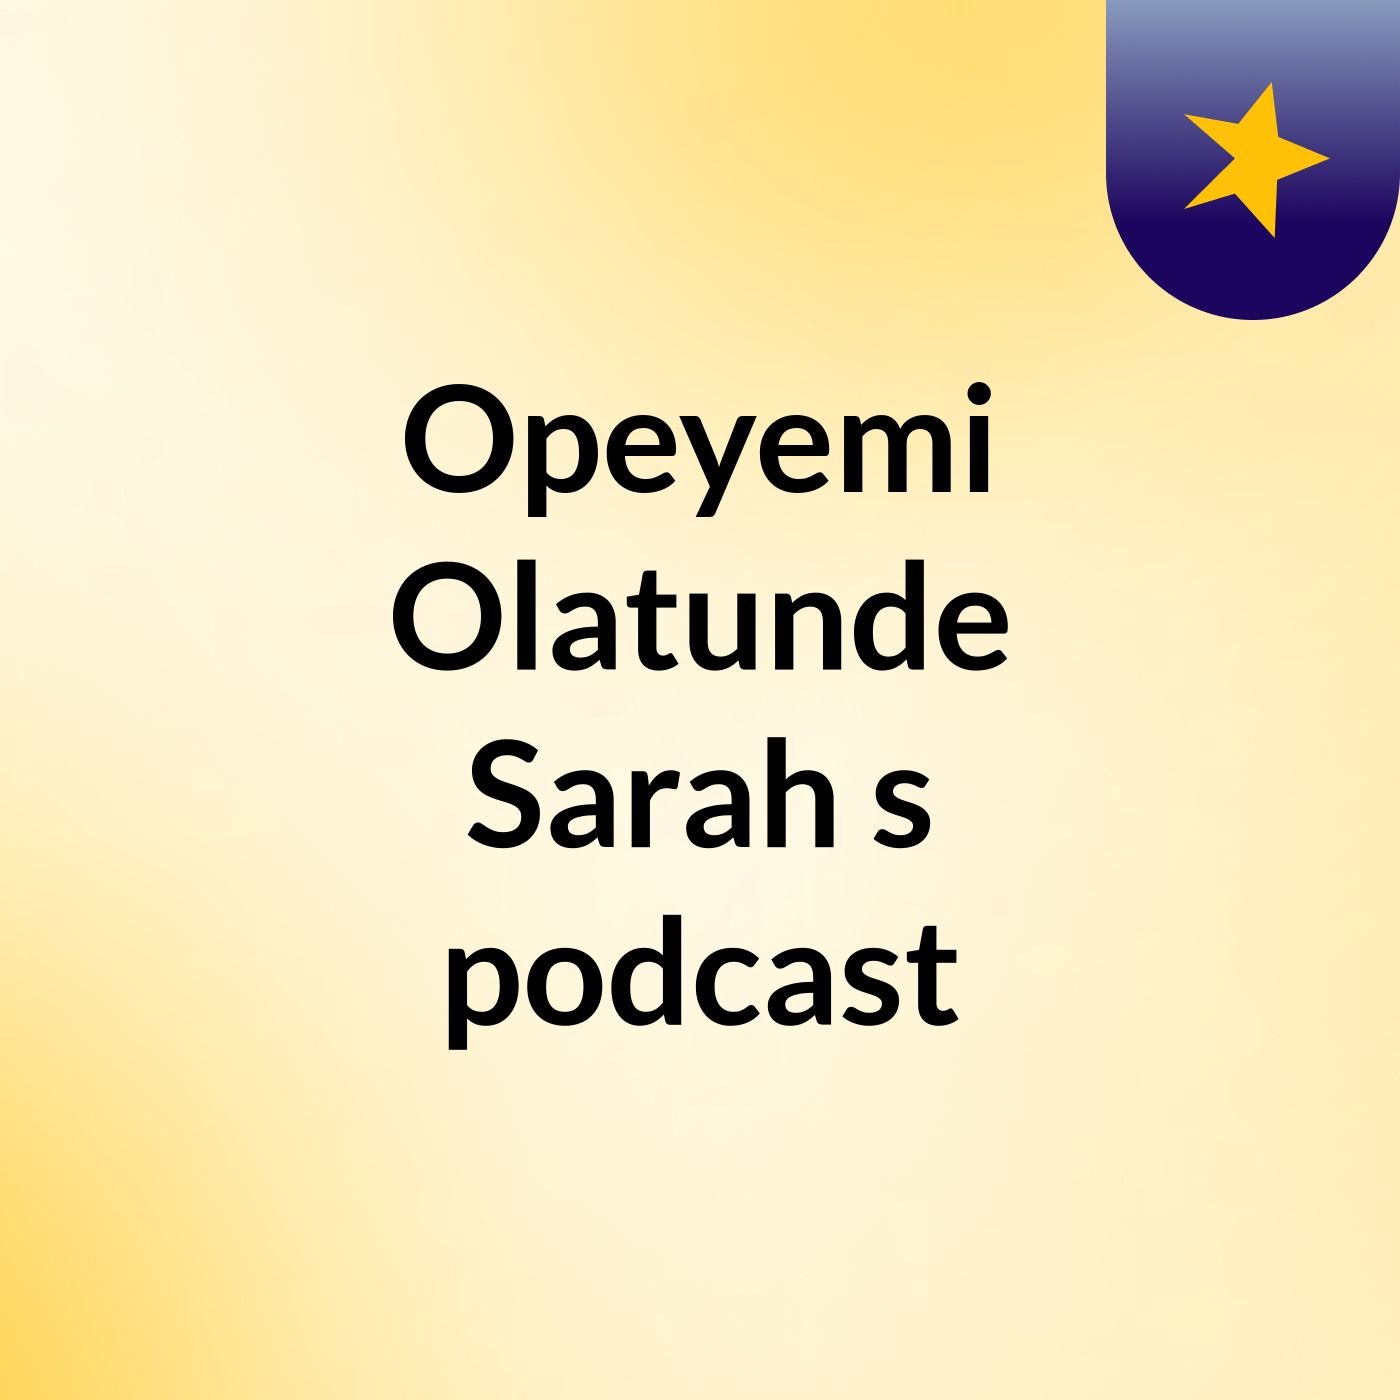 Opeyemi Olatunde Sarah's podcast